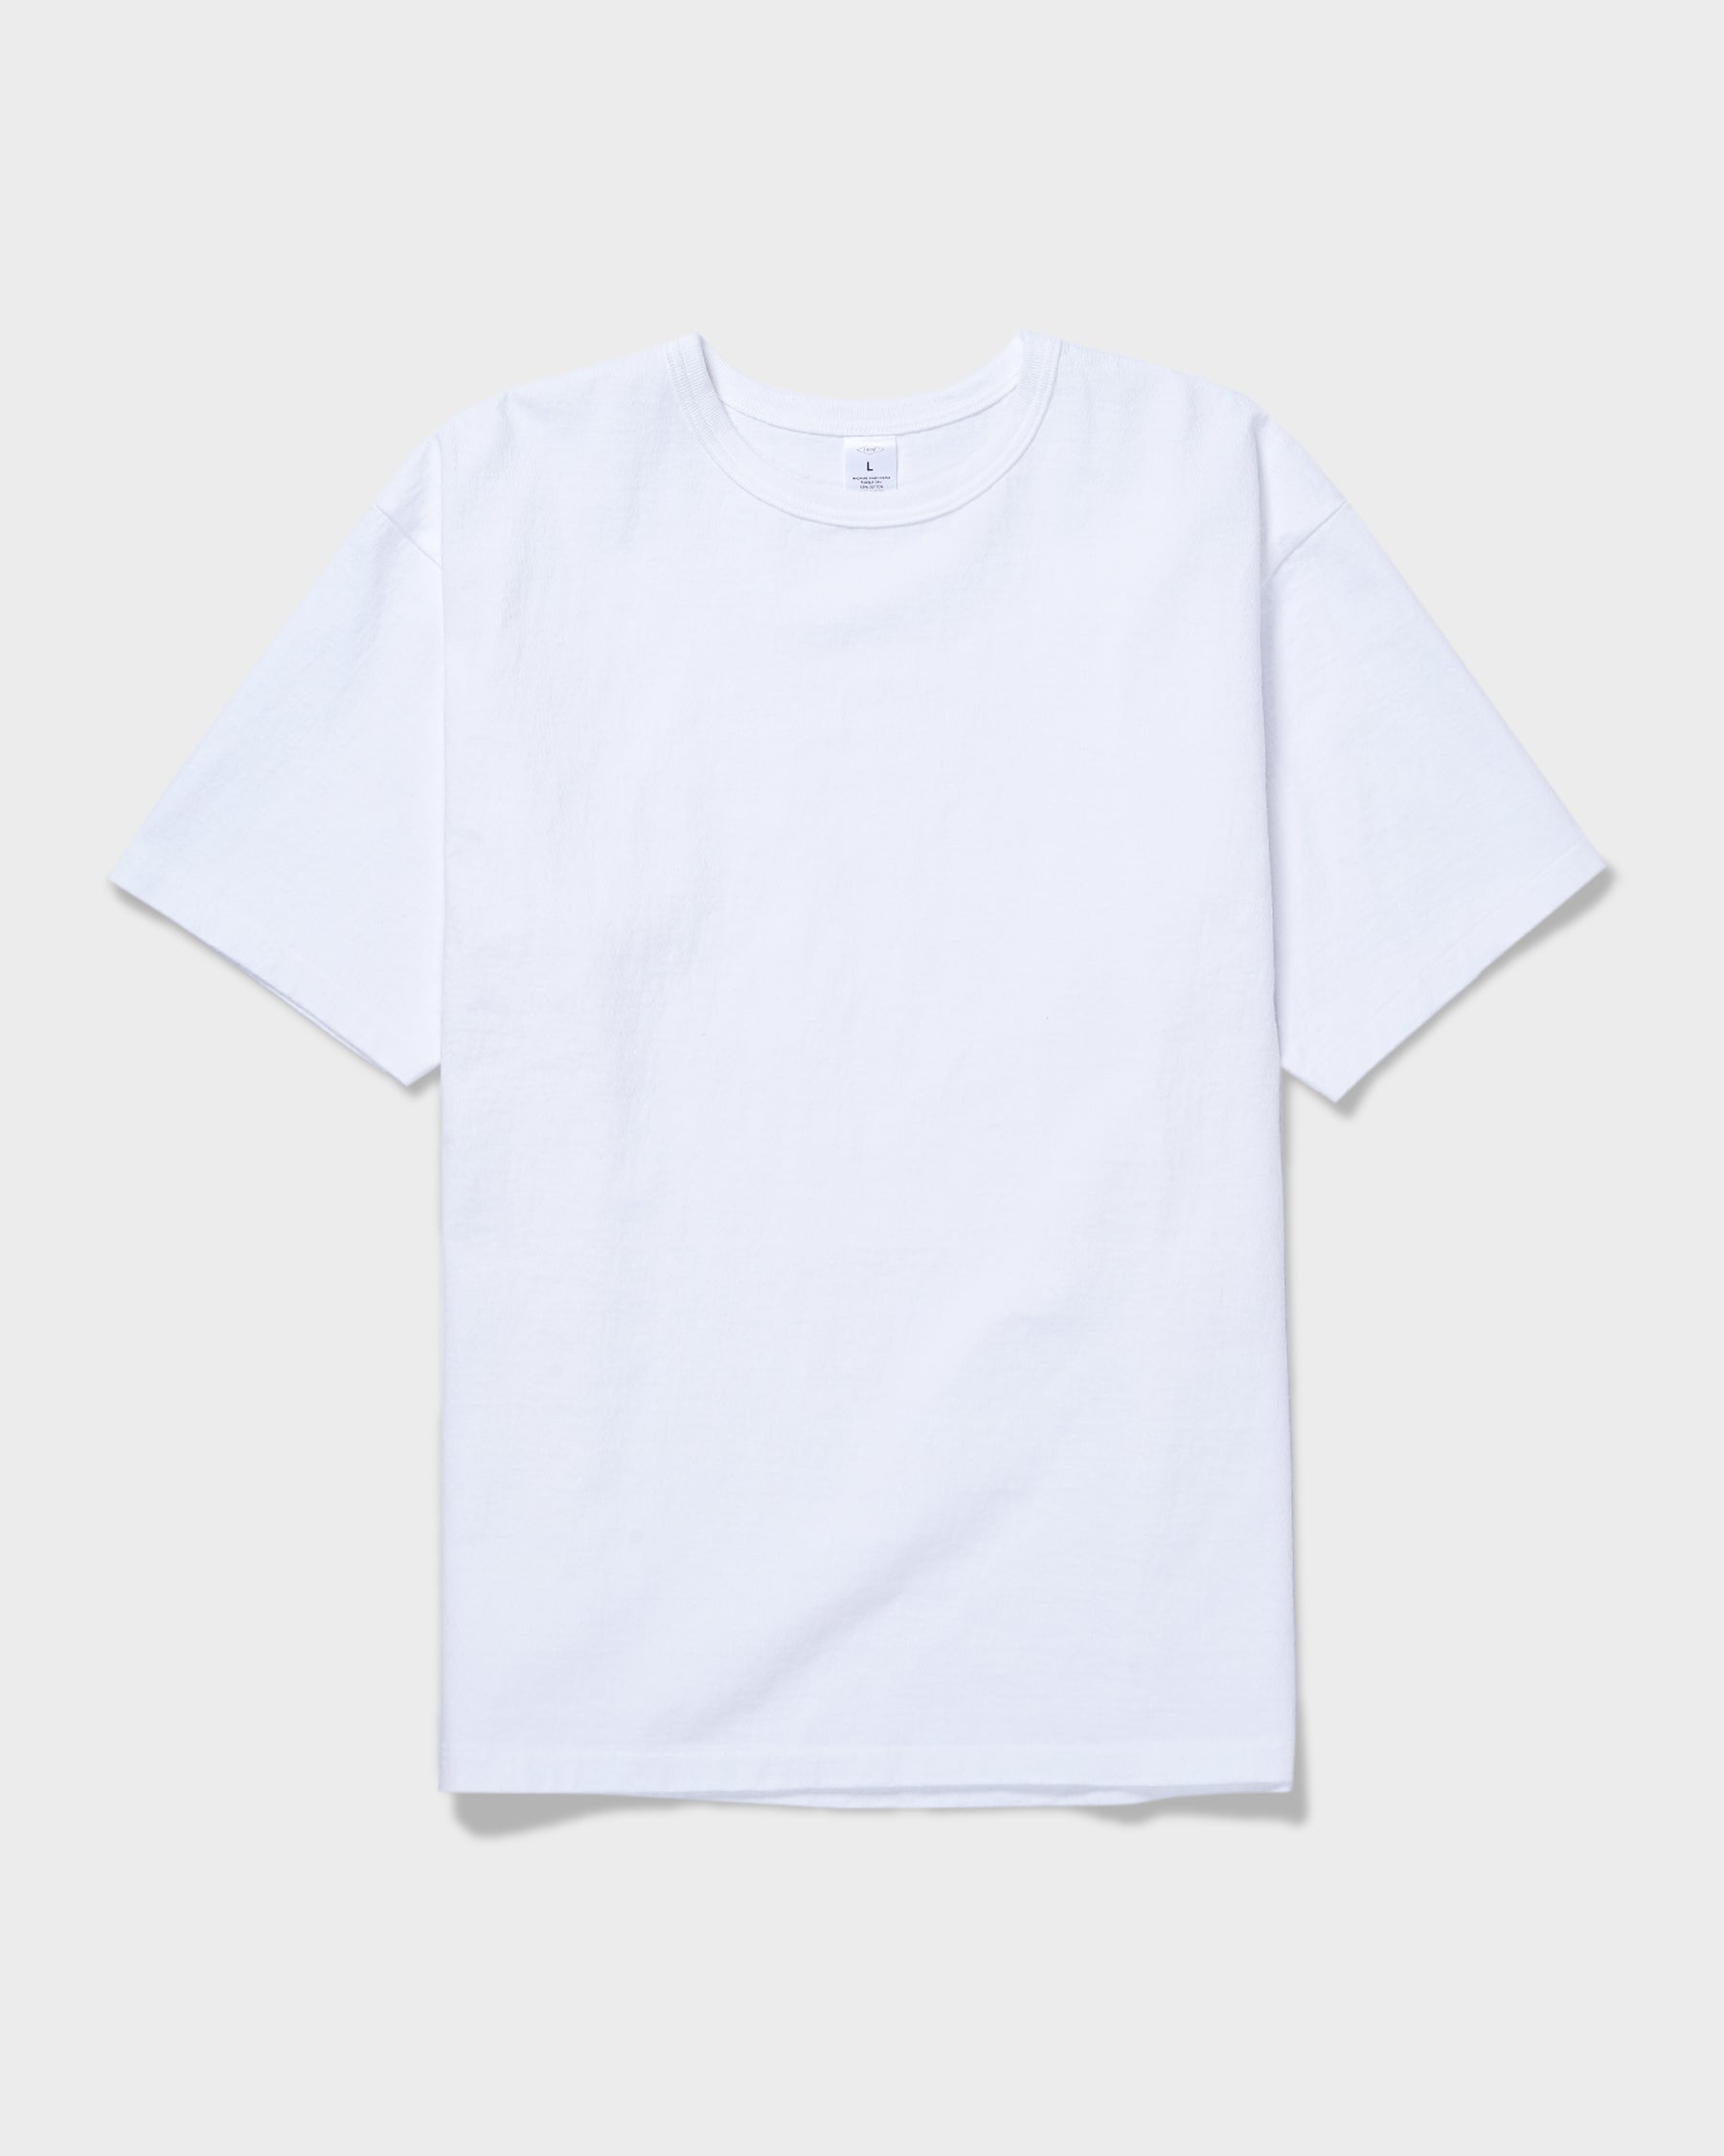 Pleats Please Shirt S/S – Front General Store